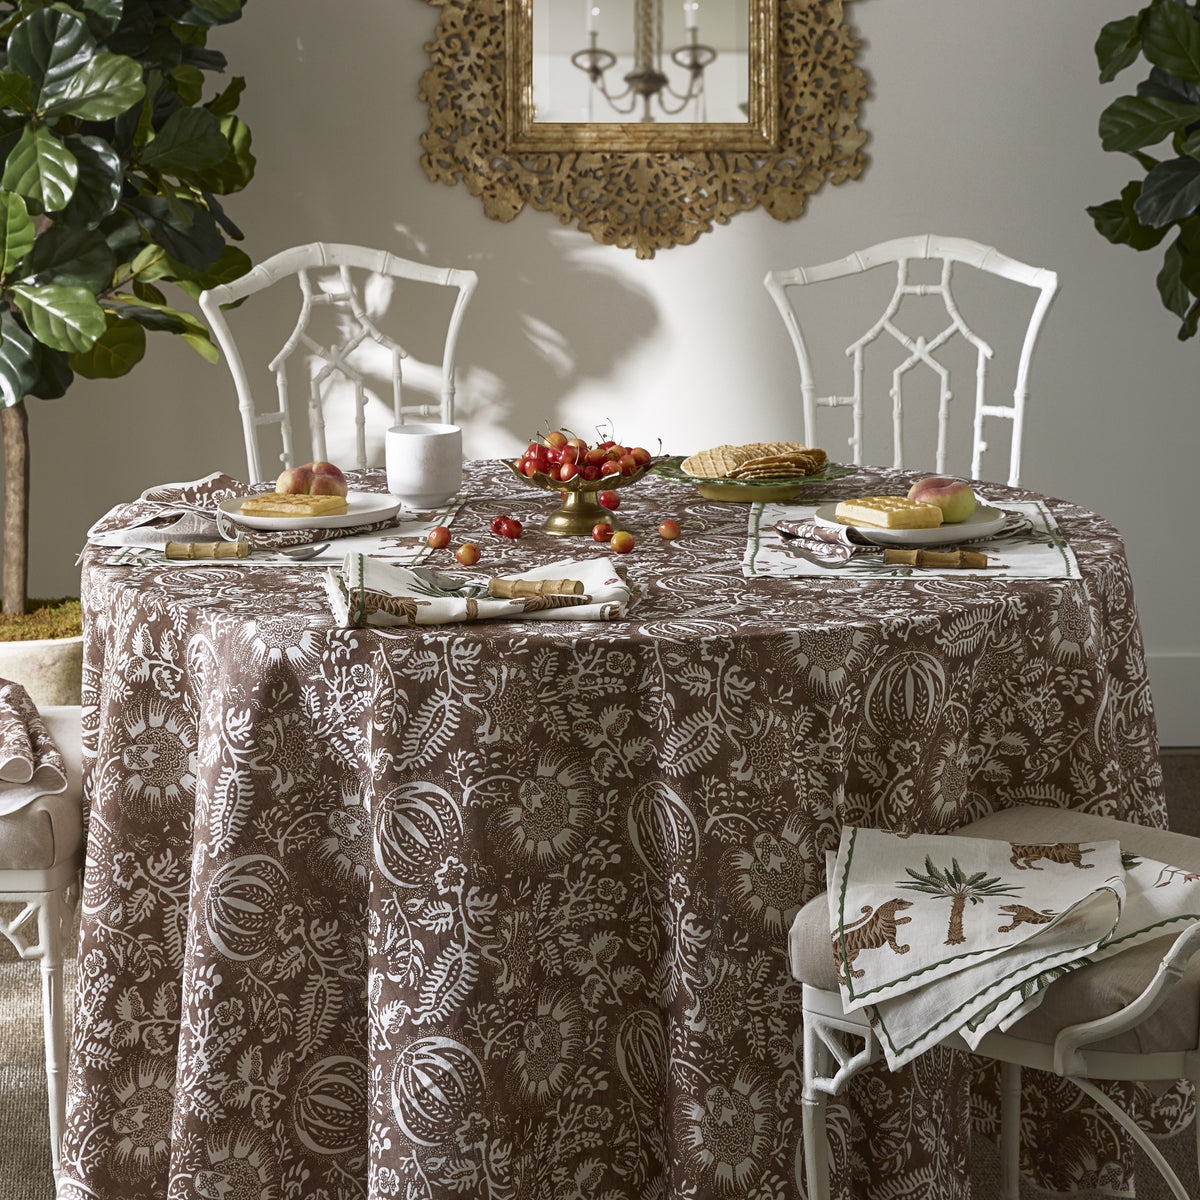 Full View Matouk Granada Table Linens in Chestnut Color